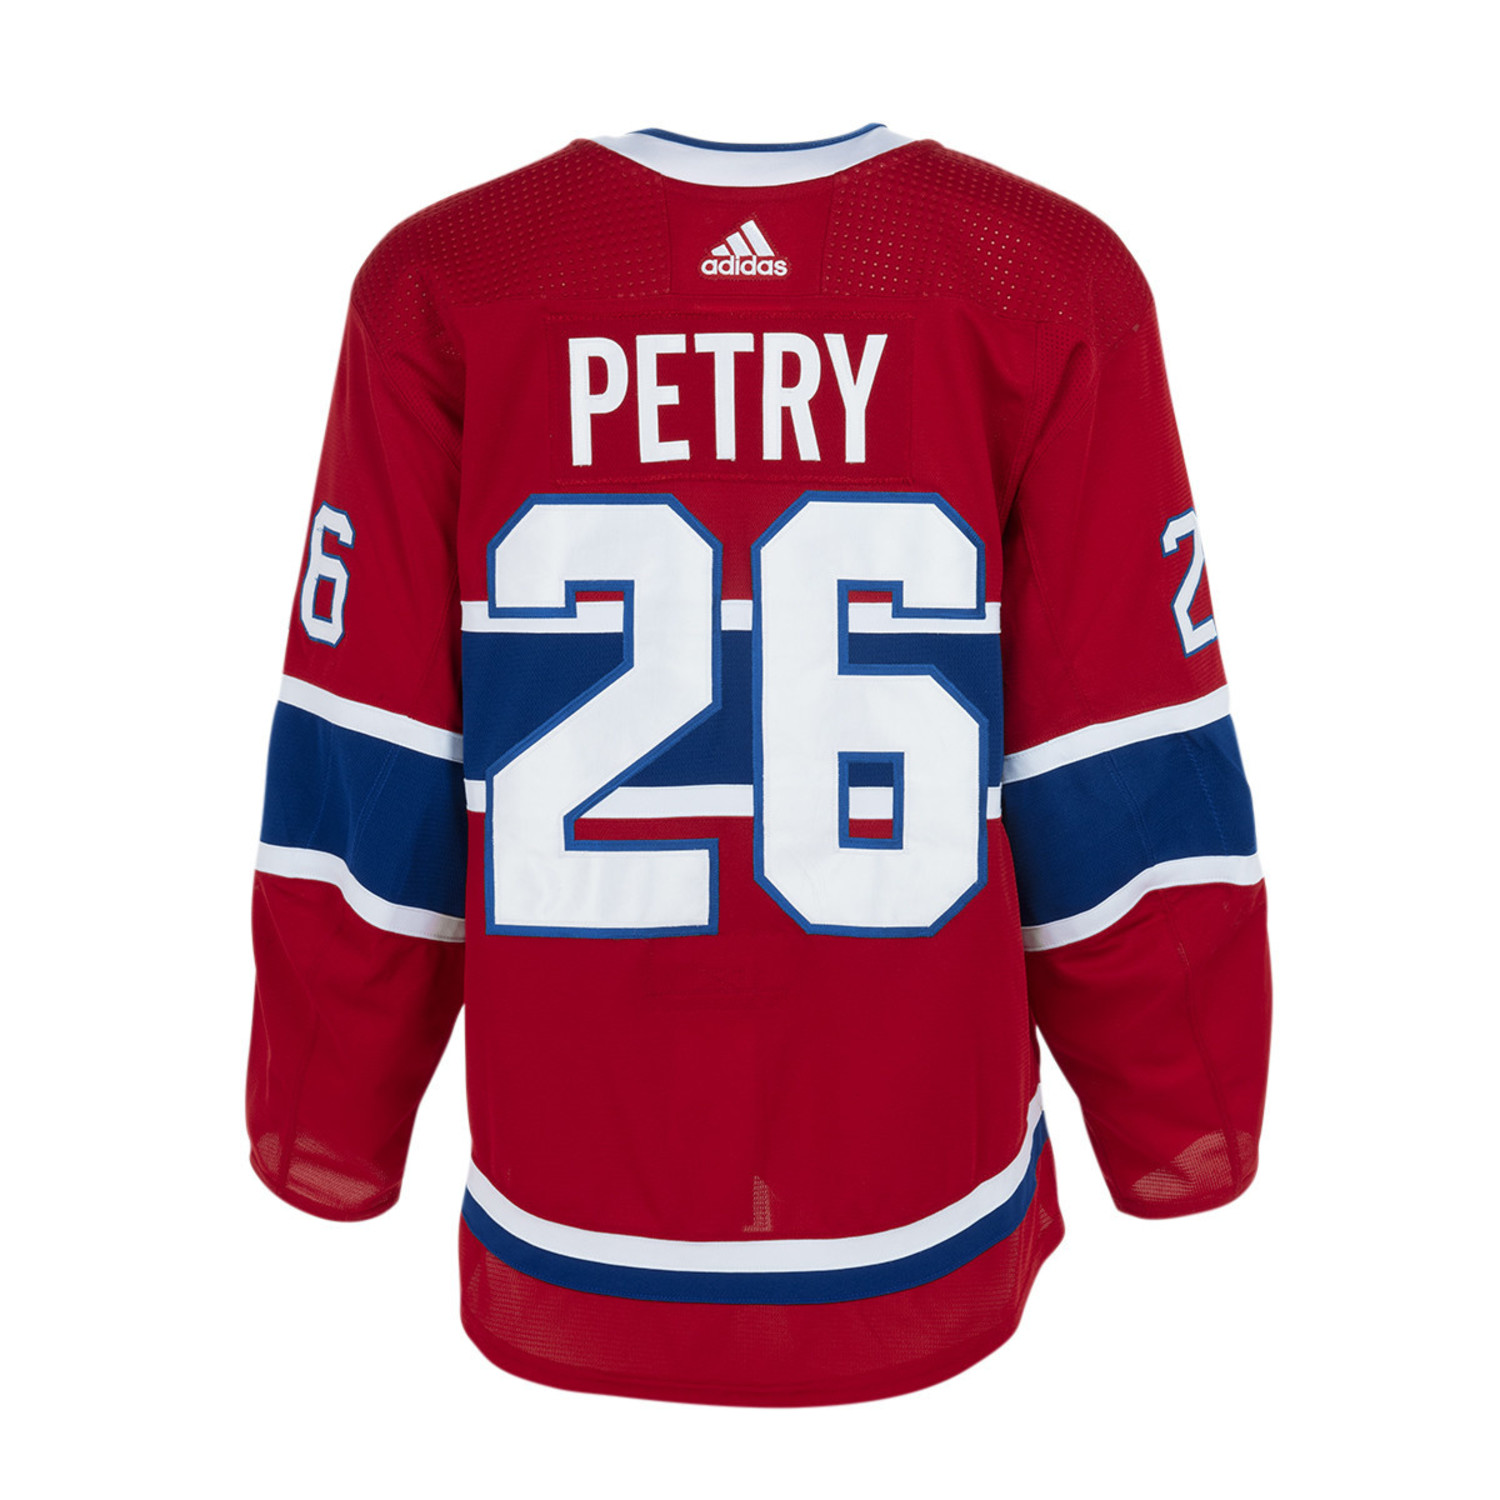 jeff petry jersey